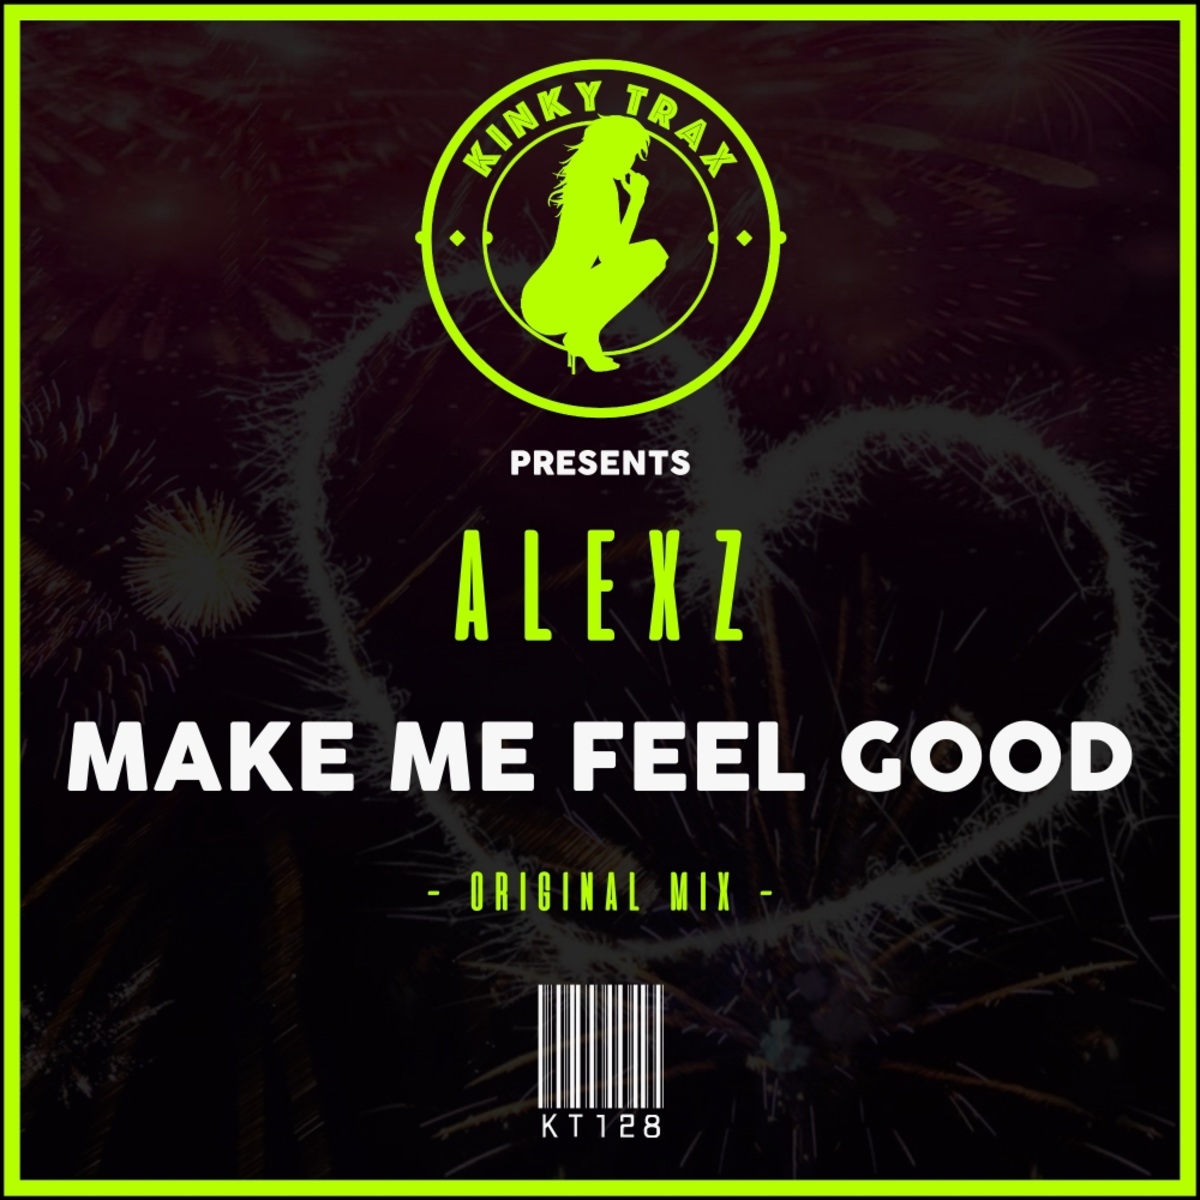 AlexZ - Make Me Feel Good / Kinky Trax